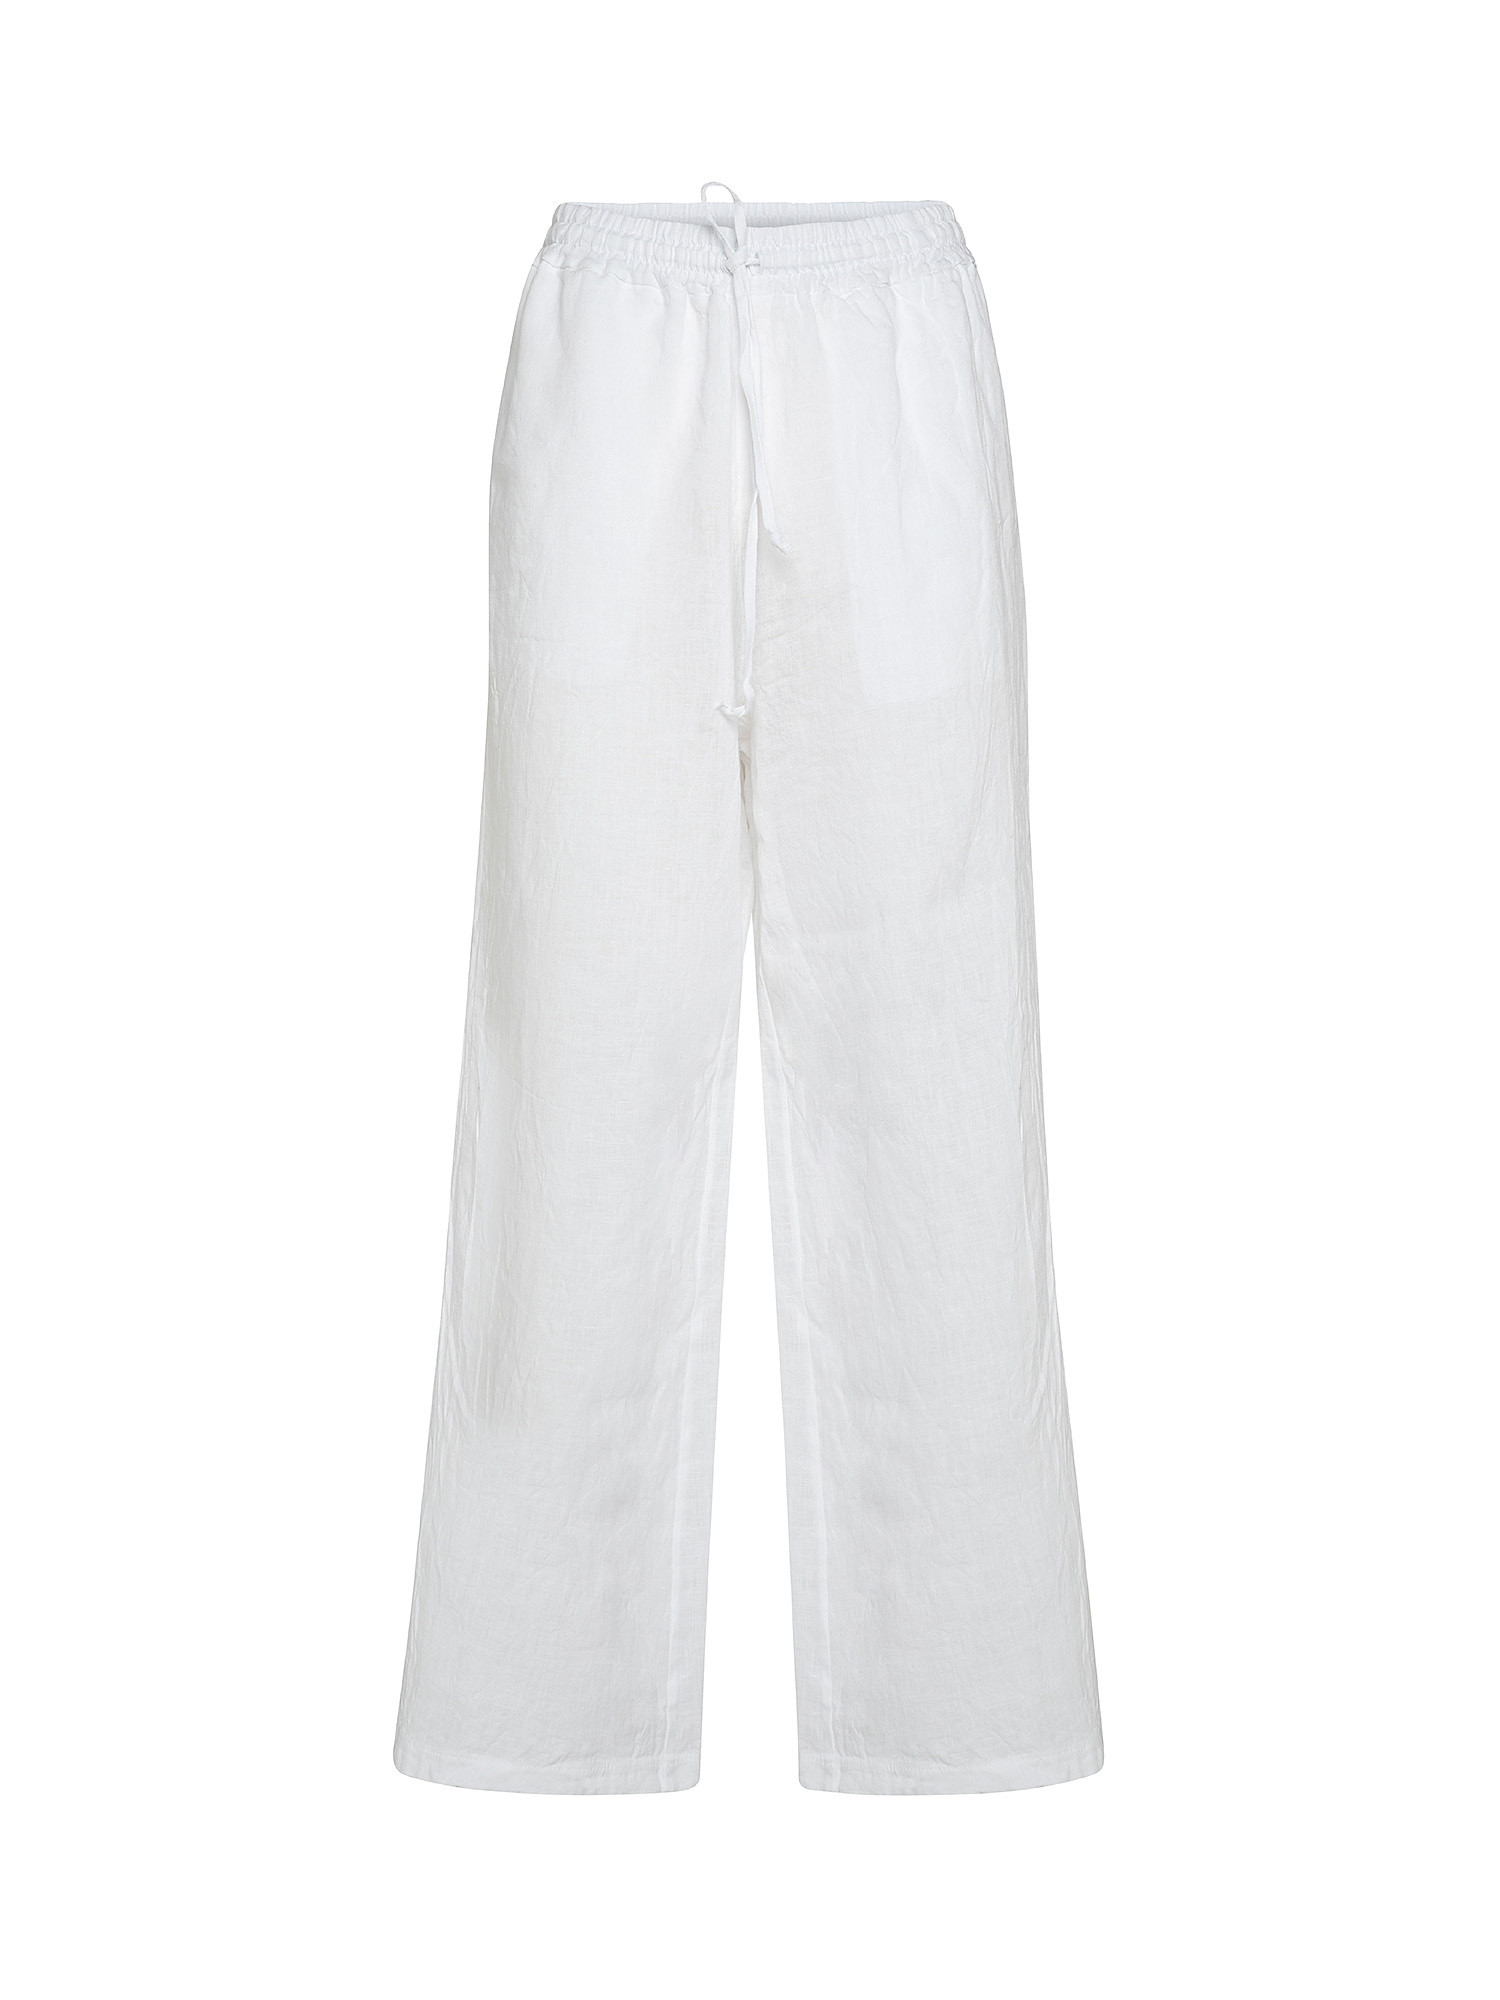 Pantalone ampio puro lino tinta unita, Bianco, large